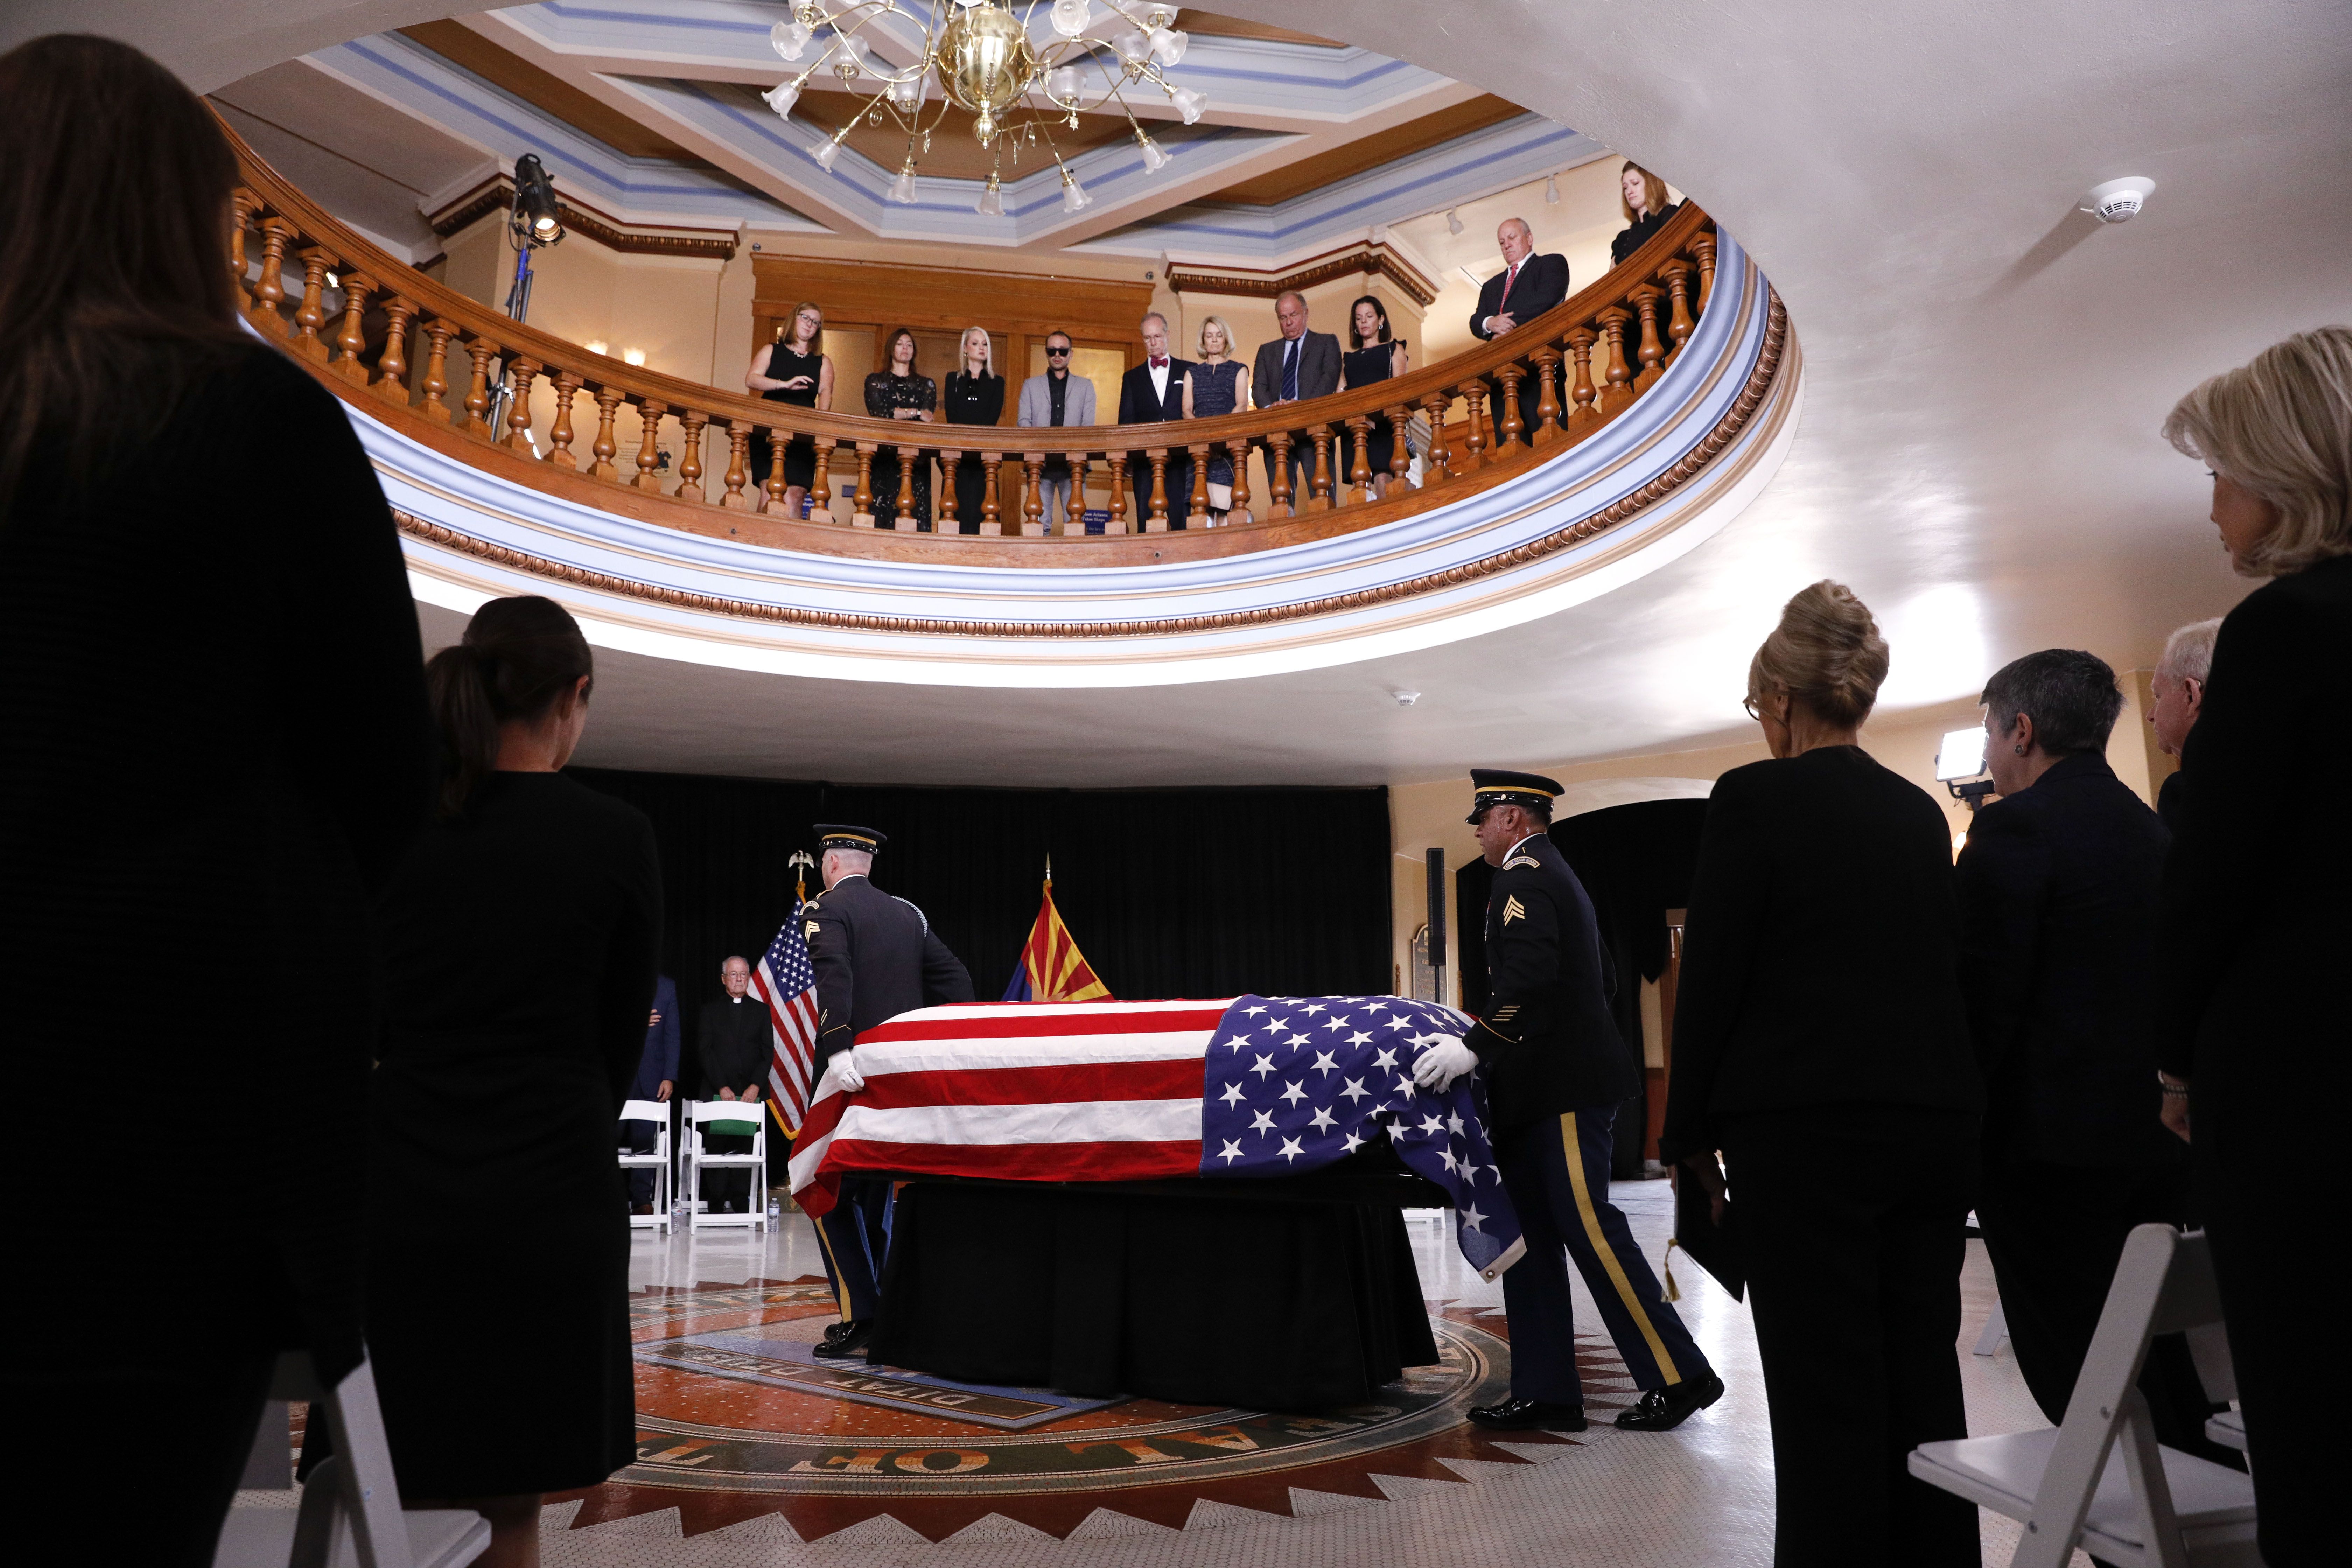 McCain's casket in the rotunda.